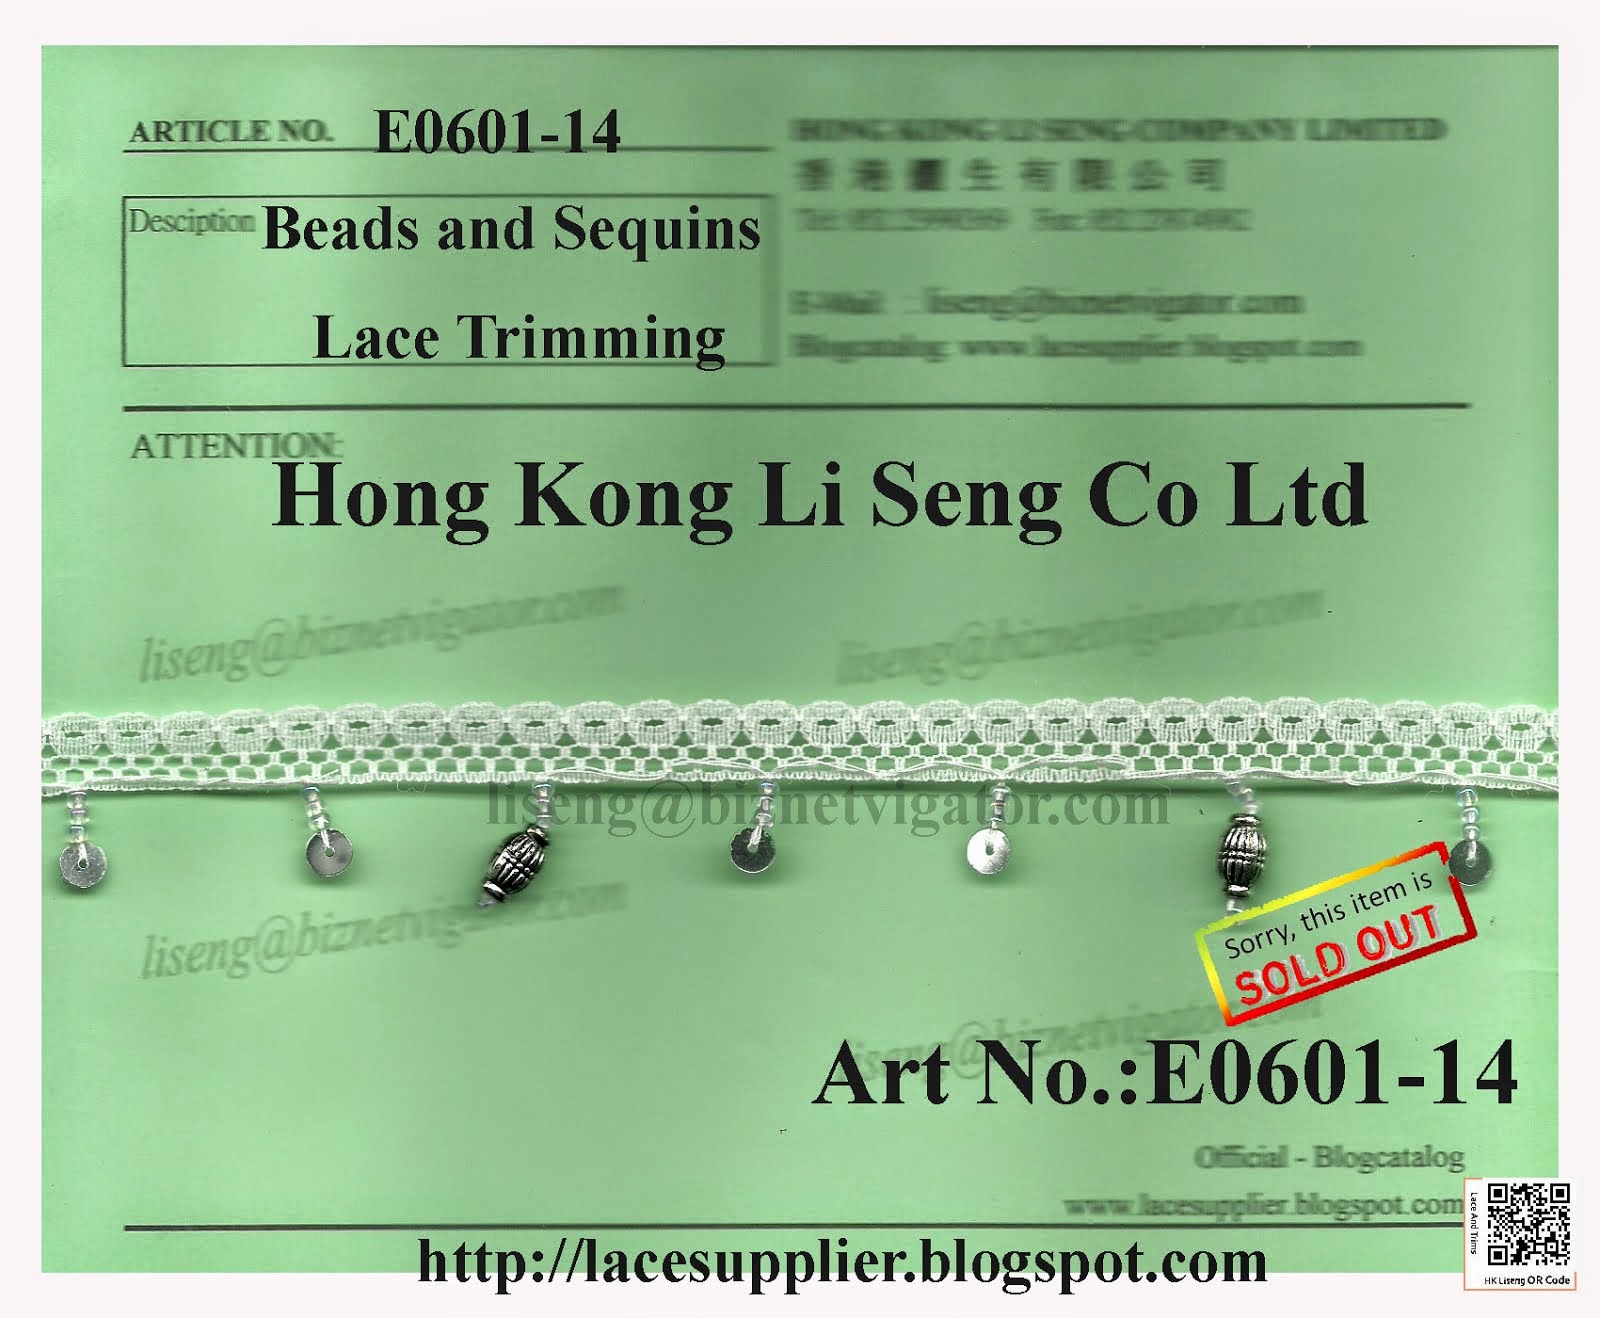 Beads and Sequins Lace Trimming Supplier - Hong Kong Li Seng Co Ltd